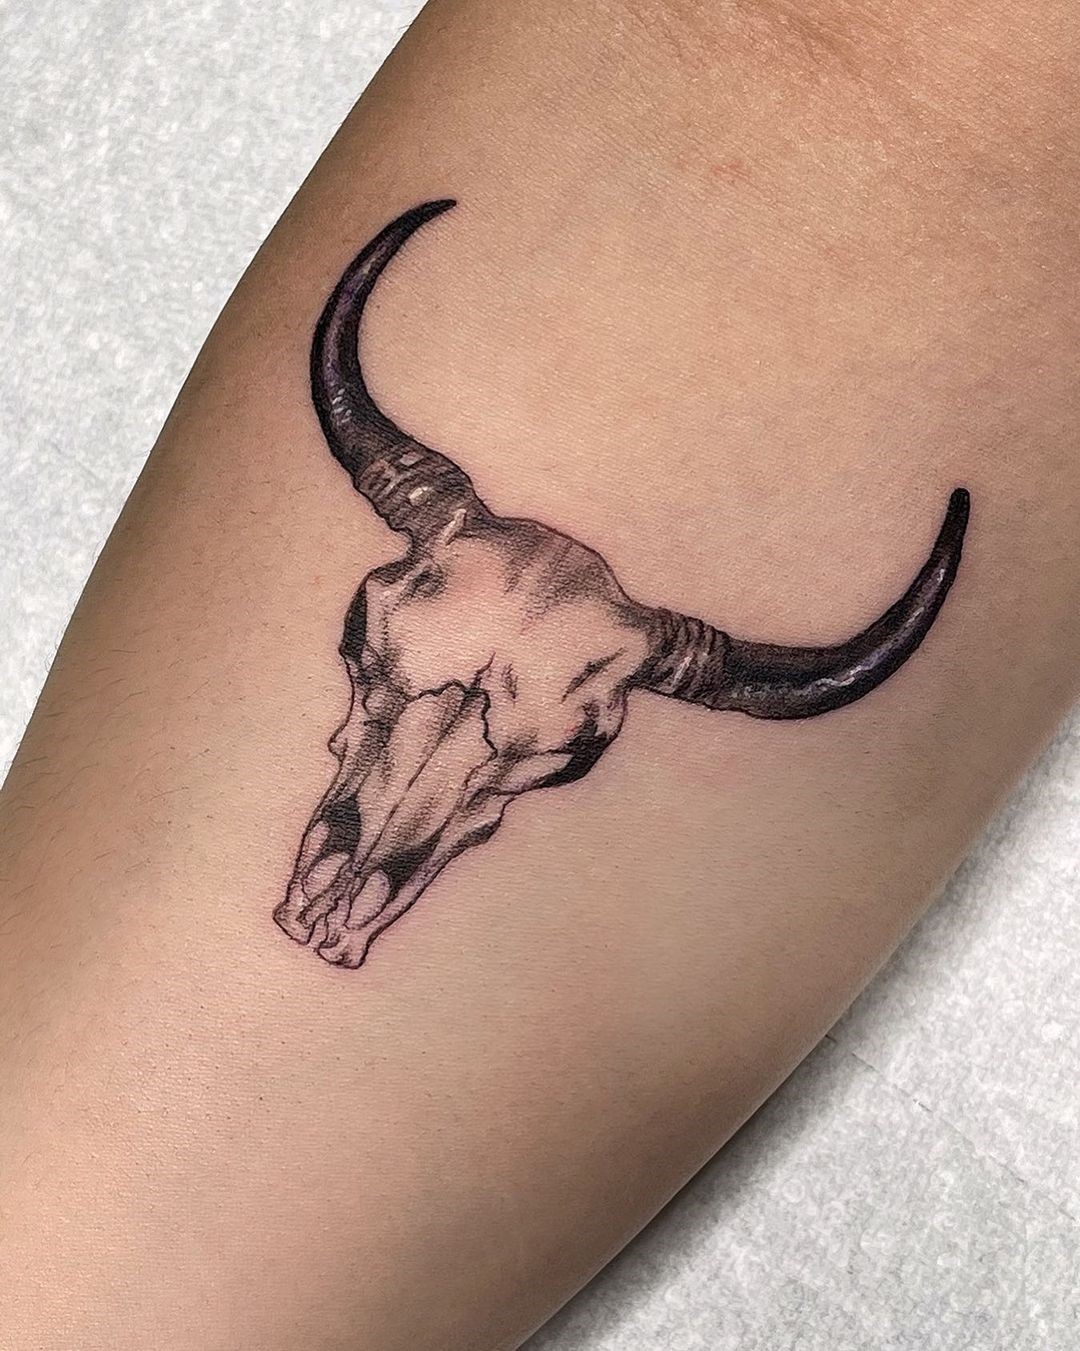 25 Best Taurus Tattoo Ideas & Meanings | YourTango